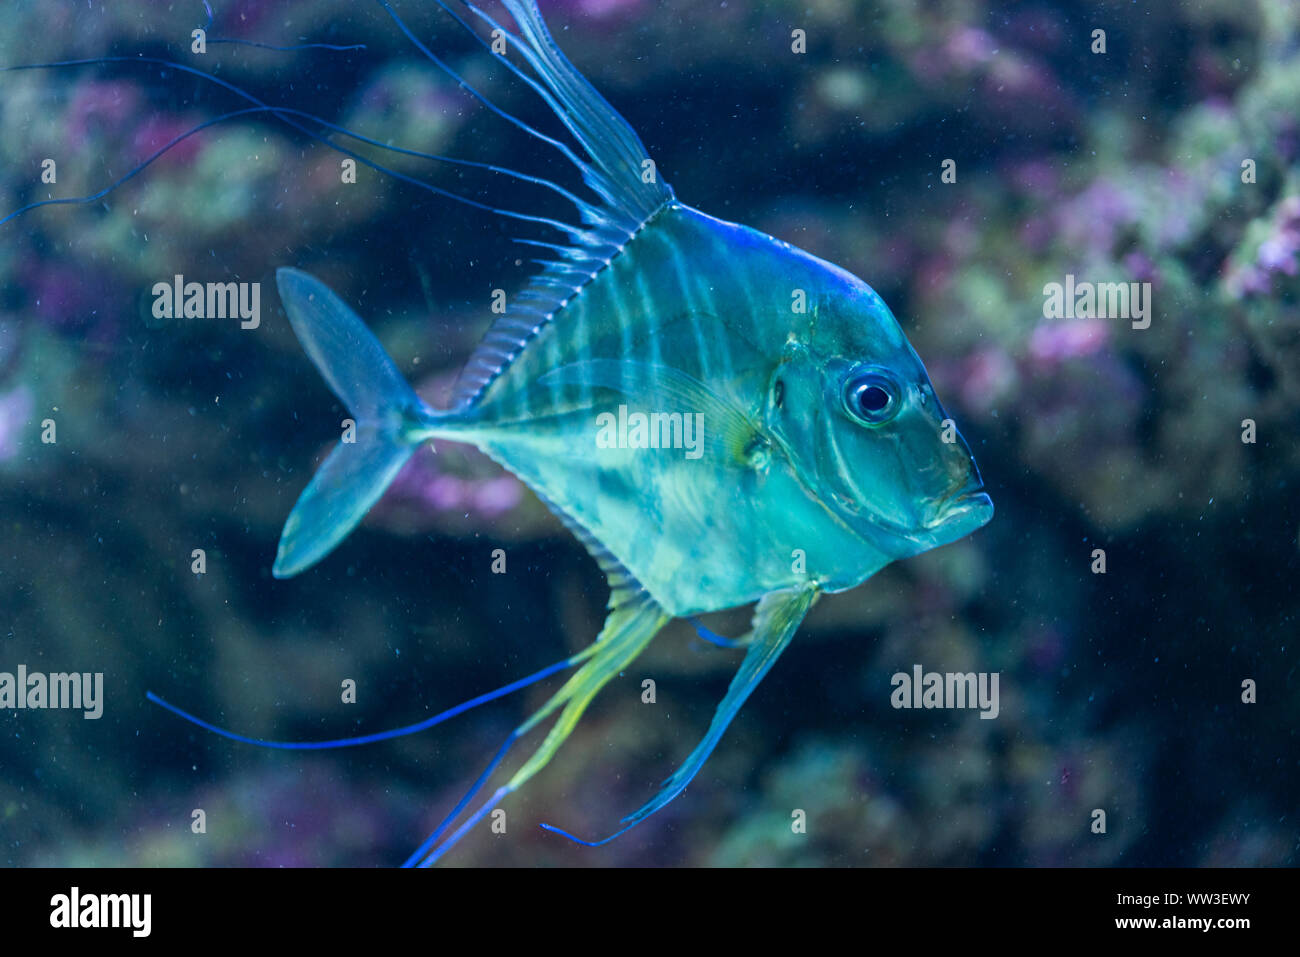 Indian threadfish - Alectis indica - saltwater fish Stock Photo